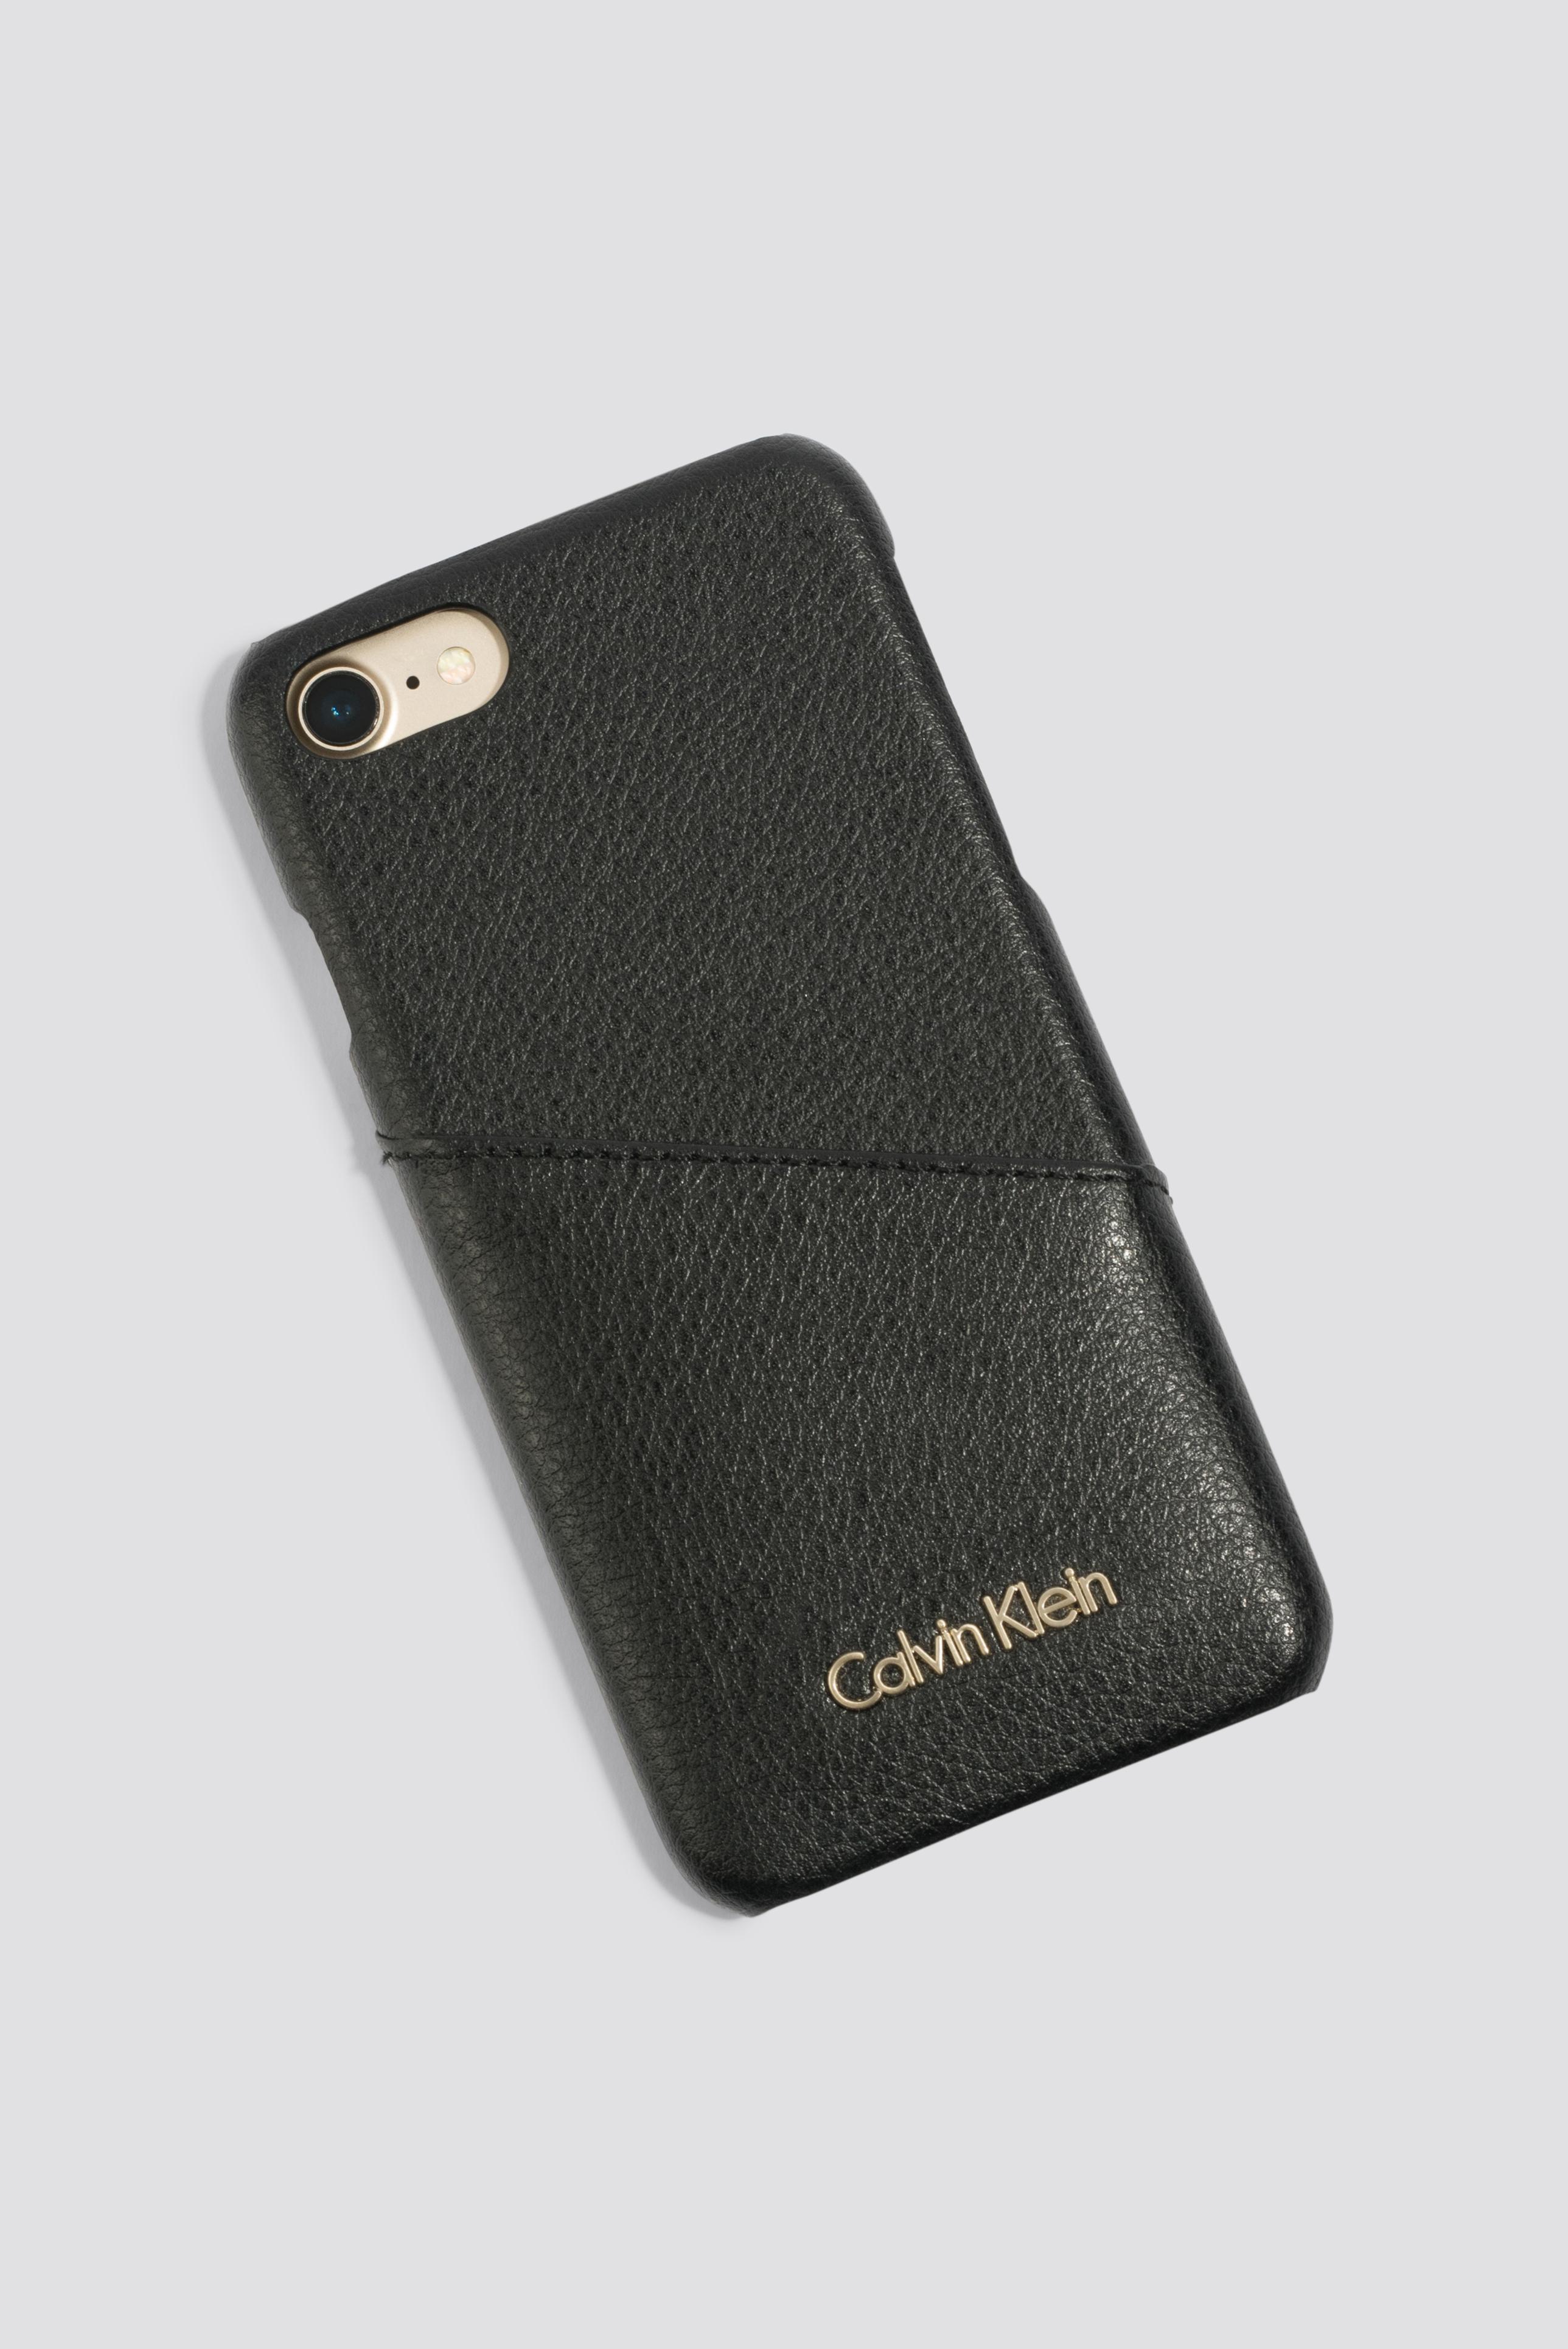 Calvin Klein Phone Case Iphone 7 Deals, SAVE 52%.